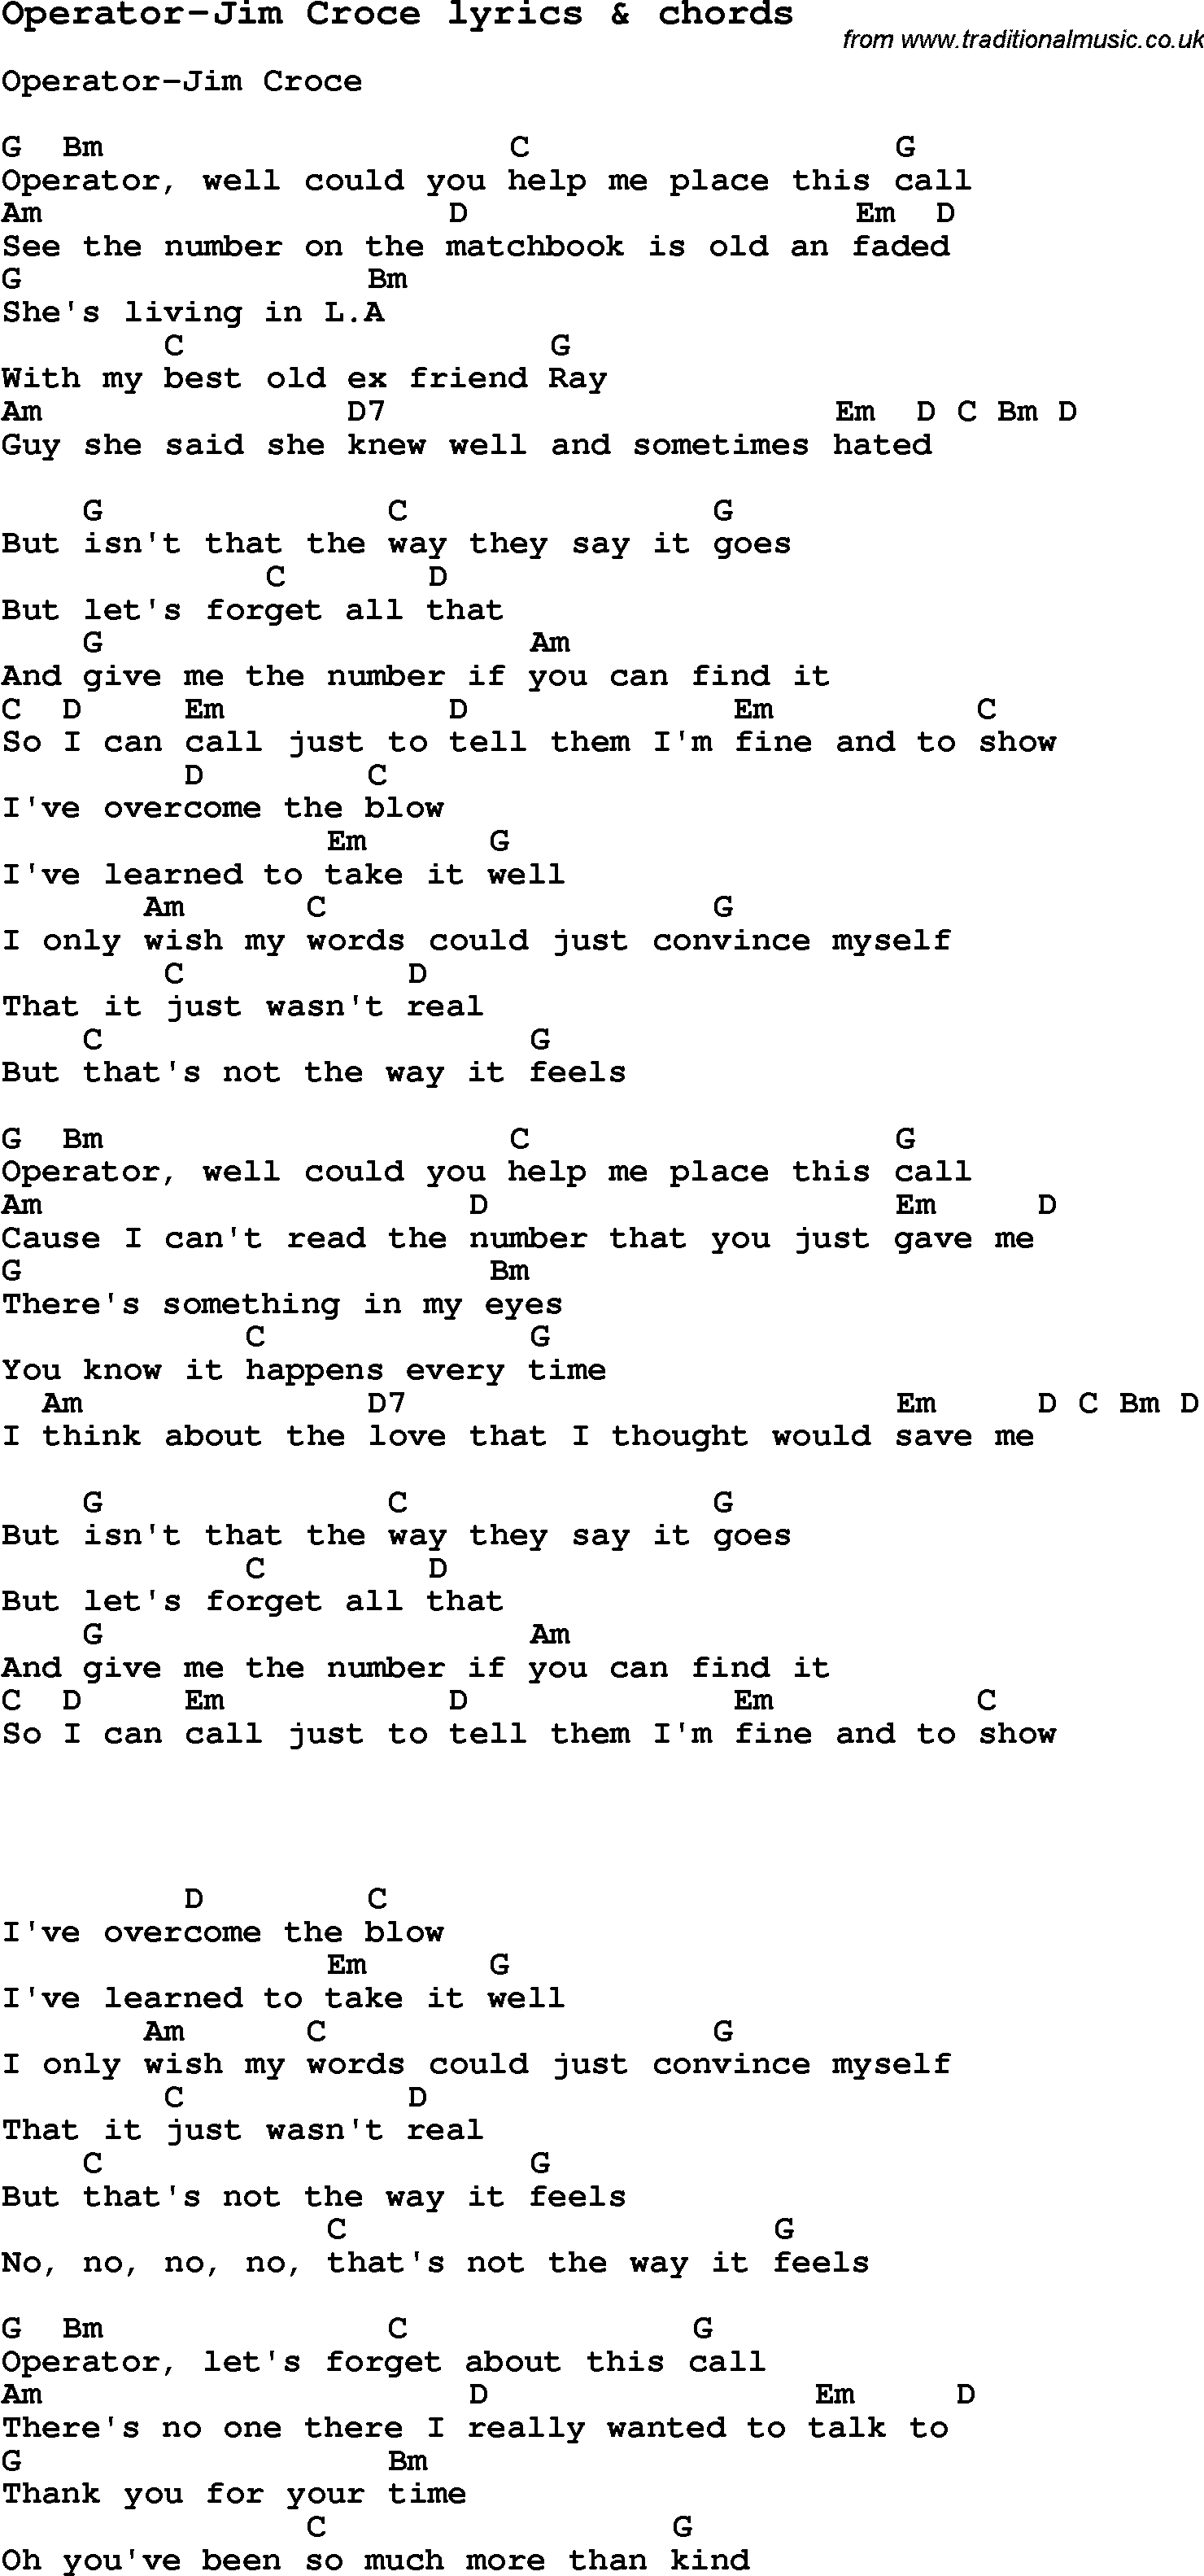 Love Song Lyrics for: Operator-Jim Croce with chords for Ukulele, Guitar Banjo etc.